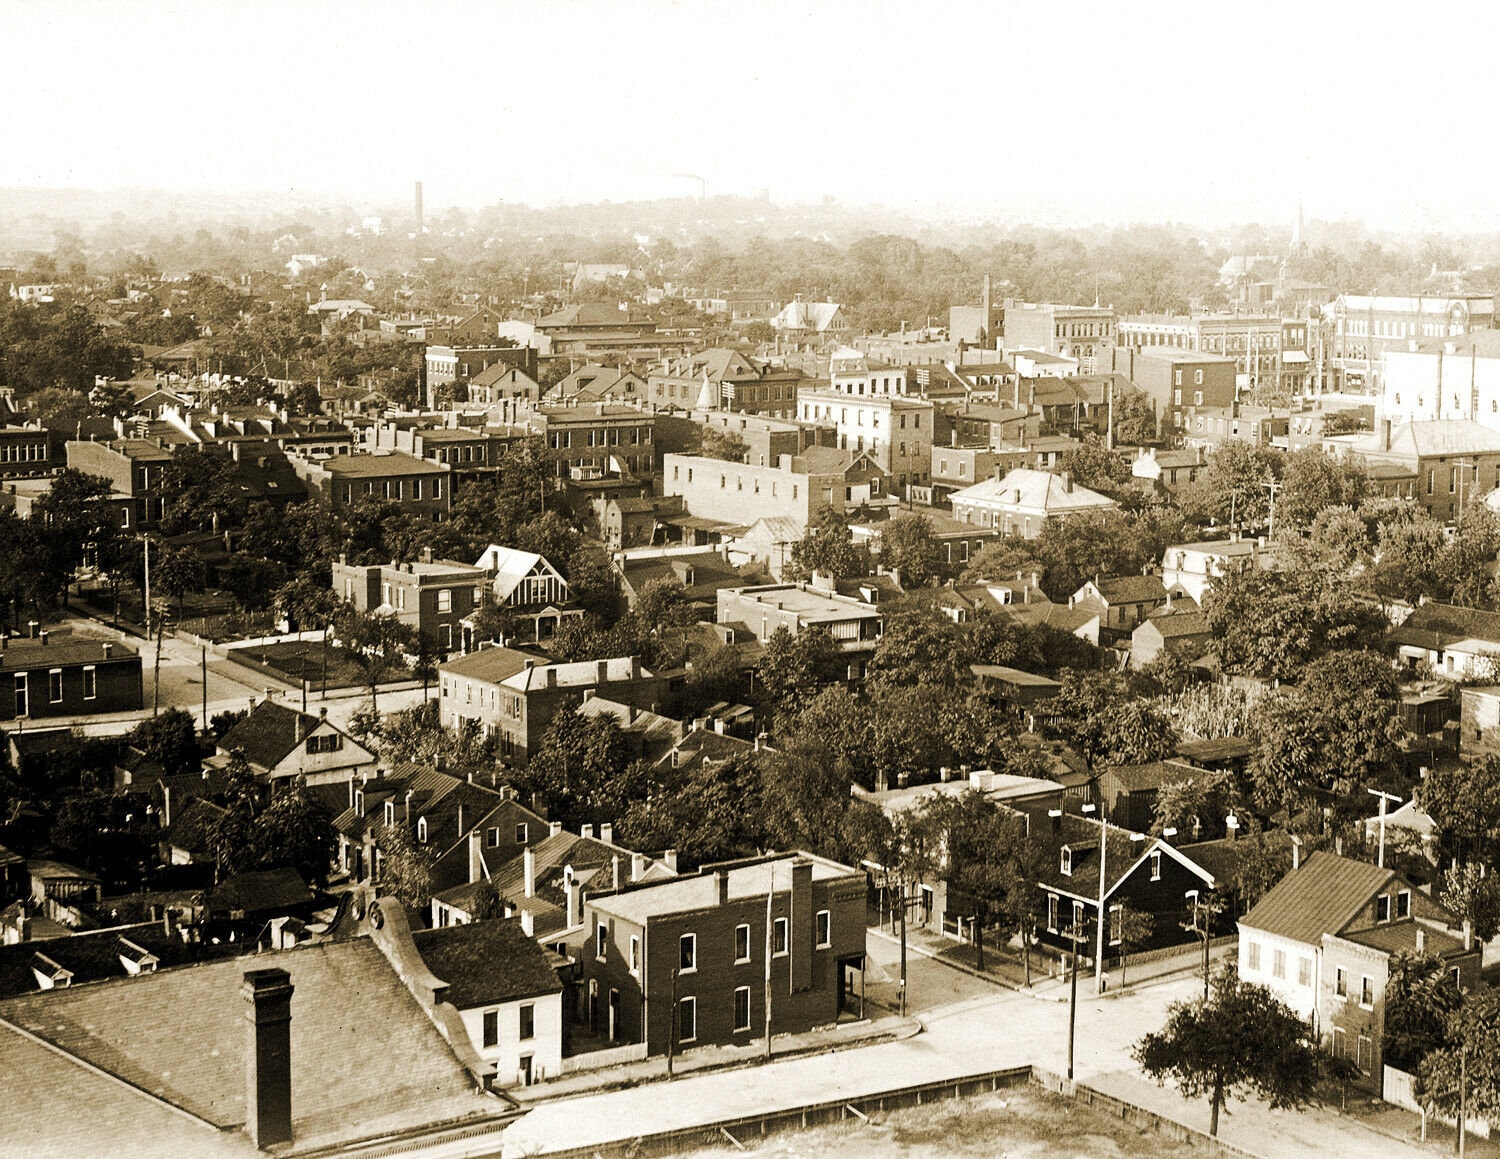 1910 Aerial View of Belleville Illinois Vintage Photograph image